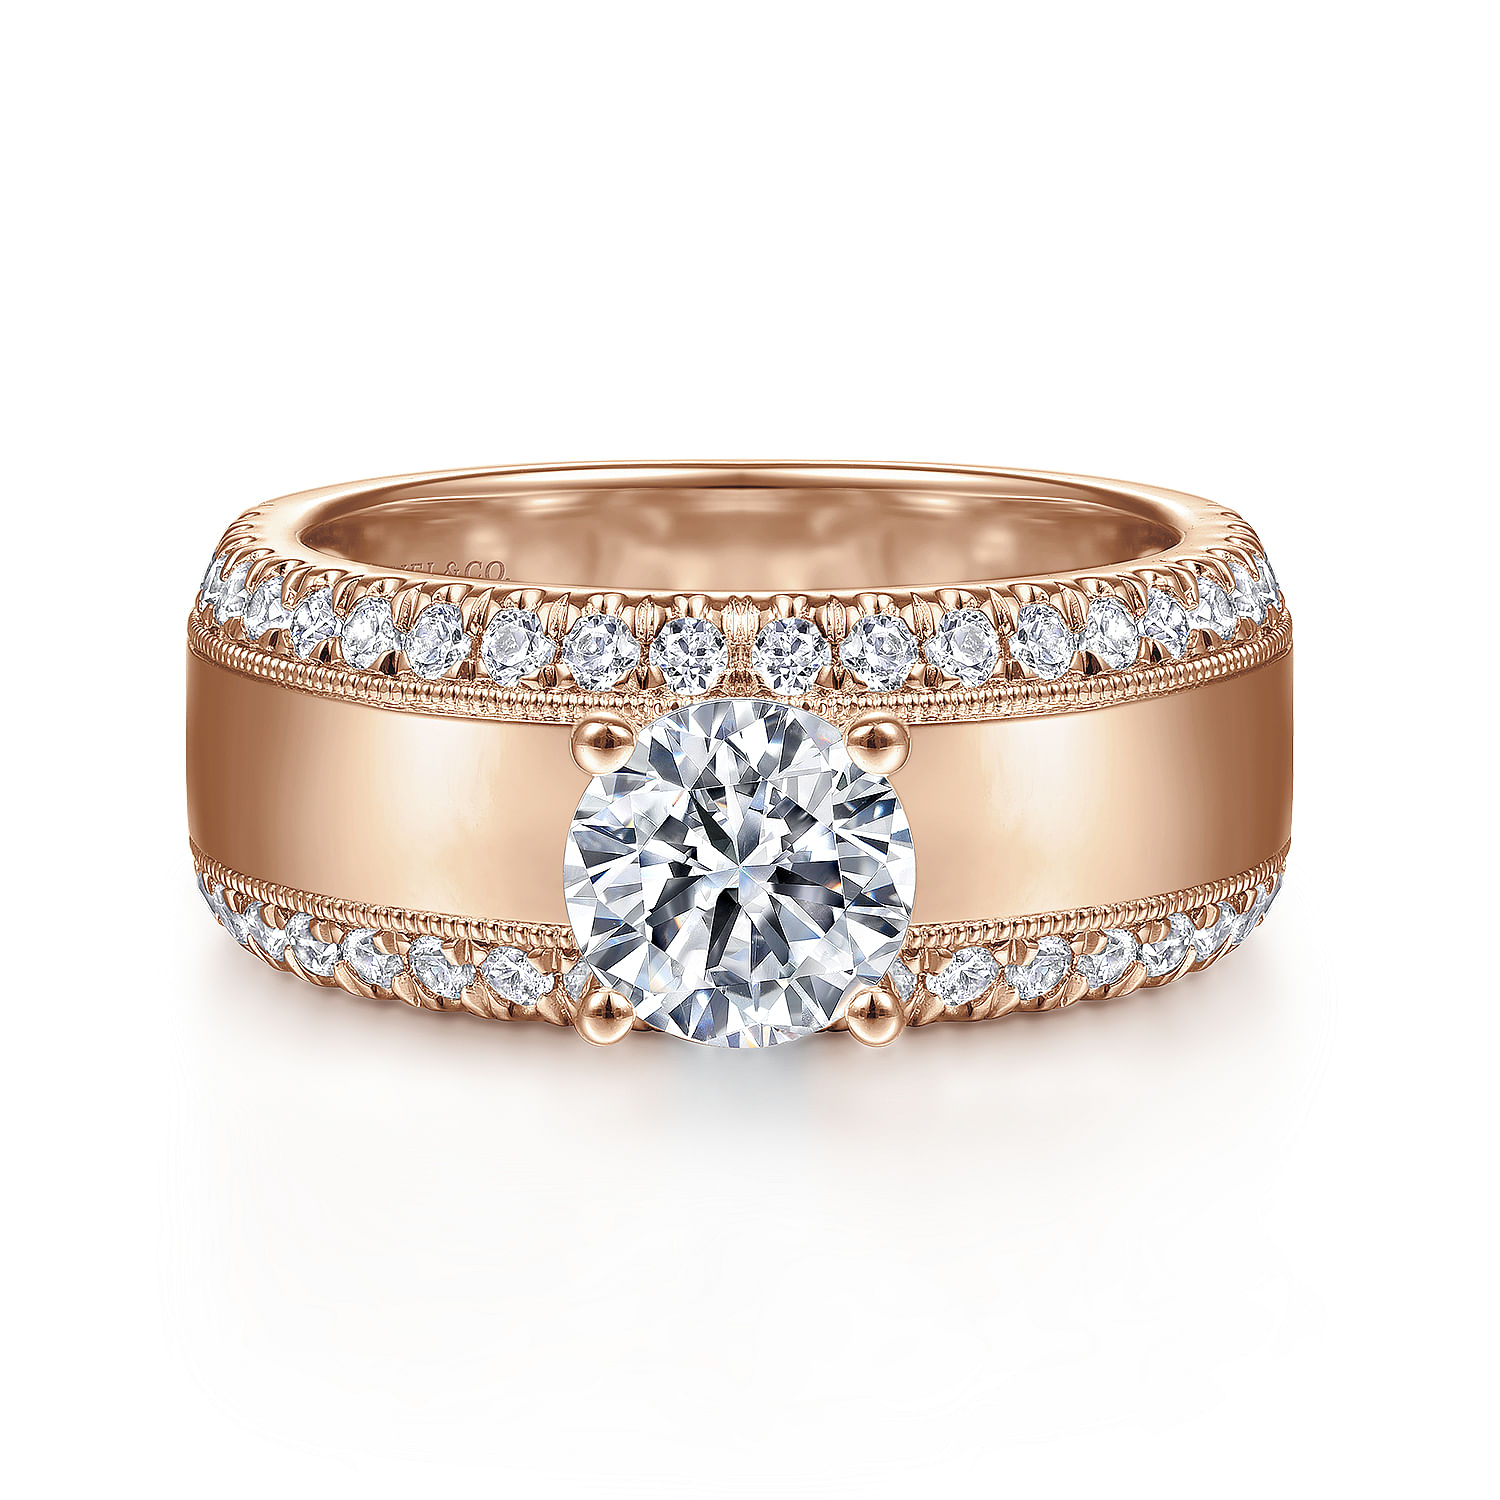 Amos---14K-Rose-Gold-Round-Wide-Band-Diamond-Engagement-Ring1